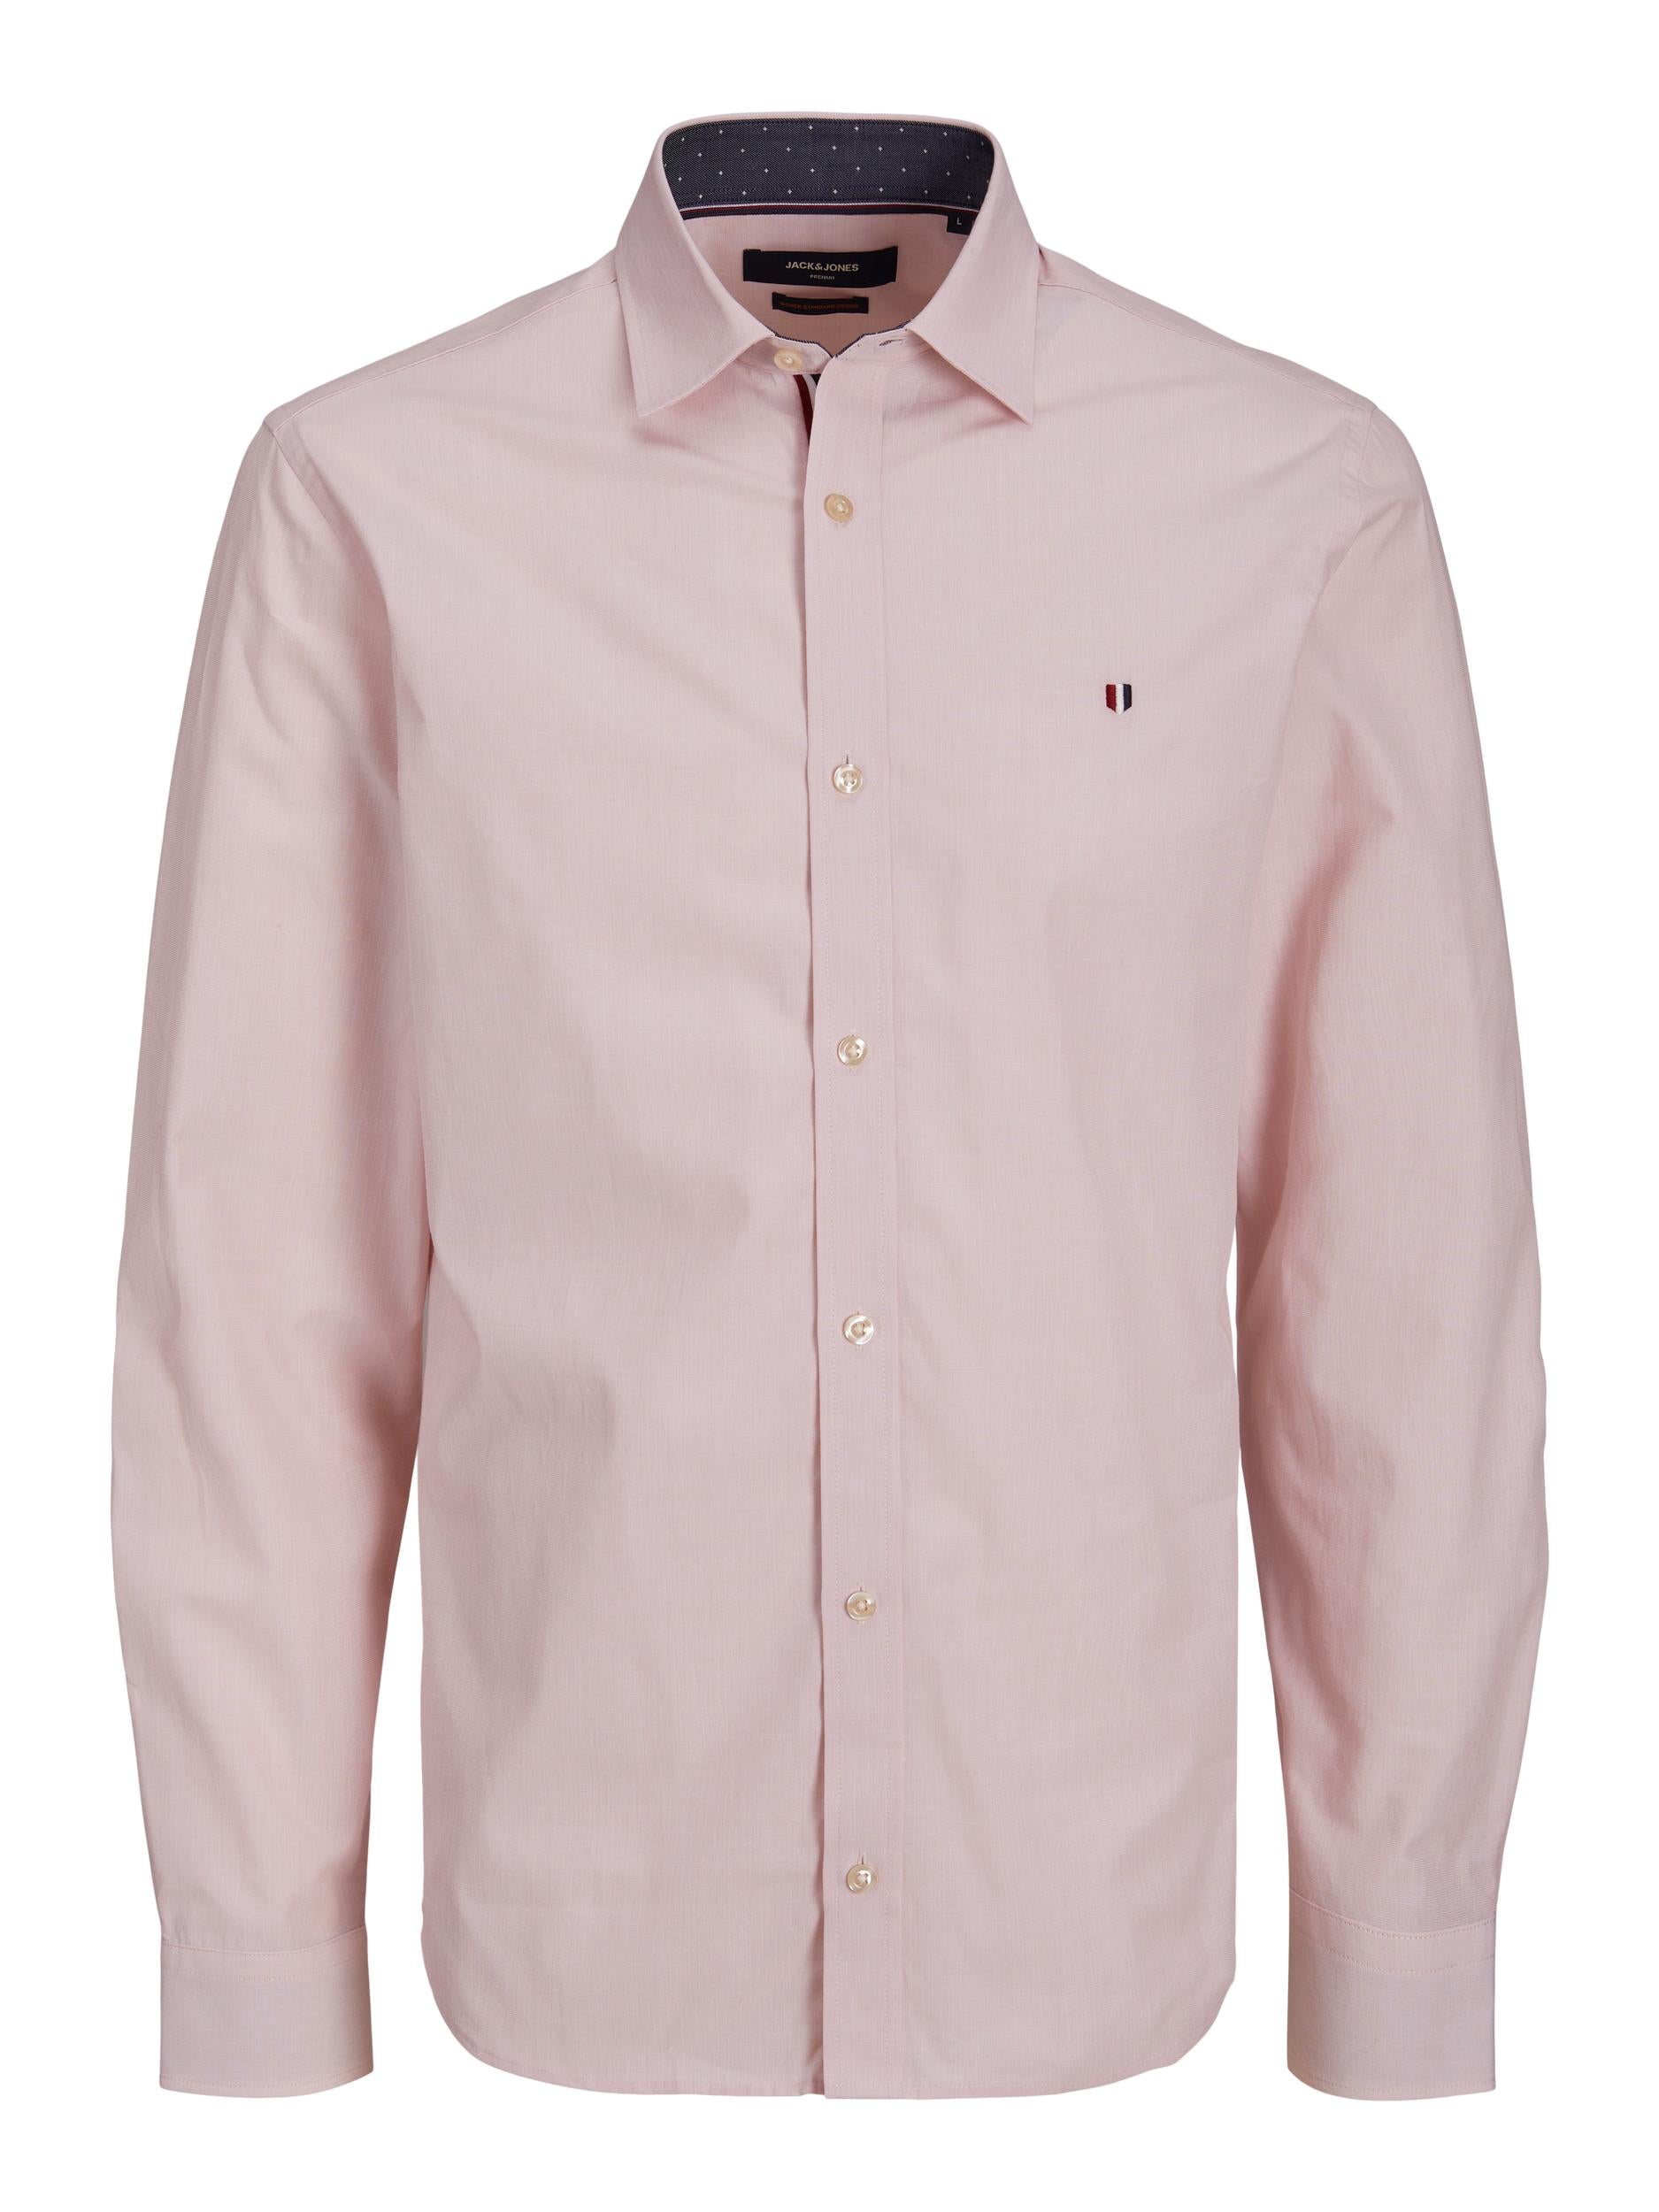 Men's Derek Classic Long Sleeve Shirt-Misty Rose-Front View